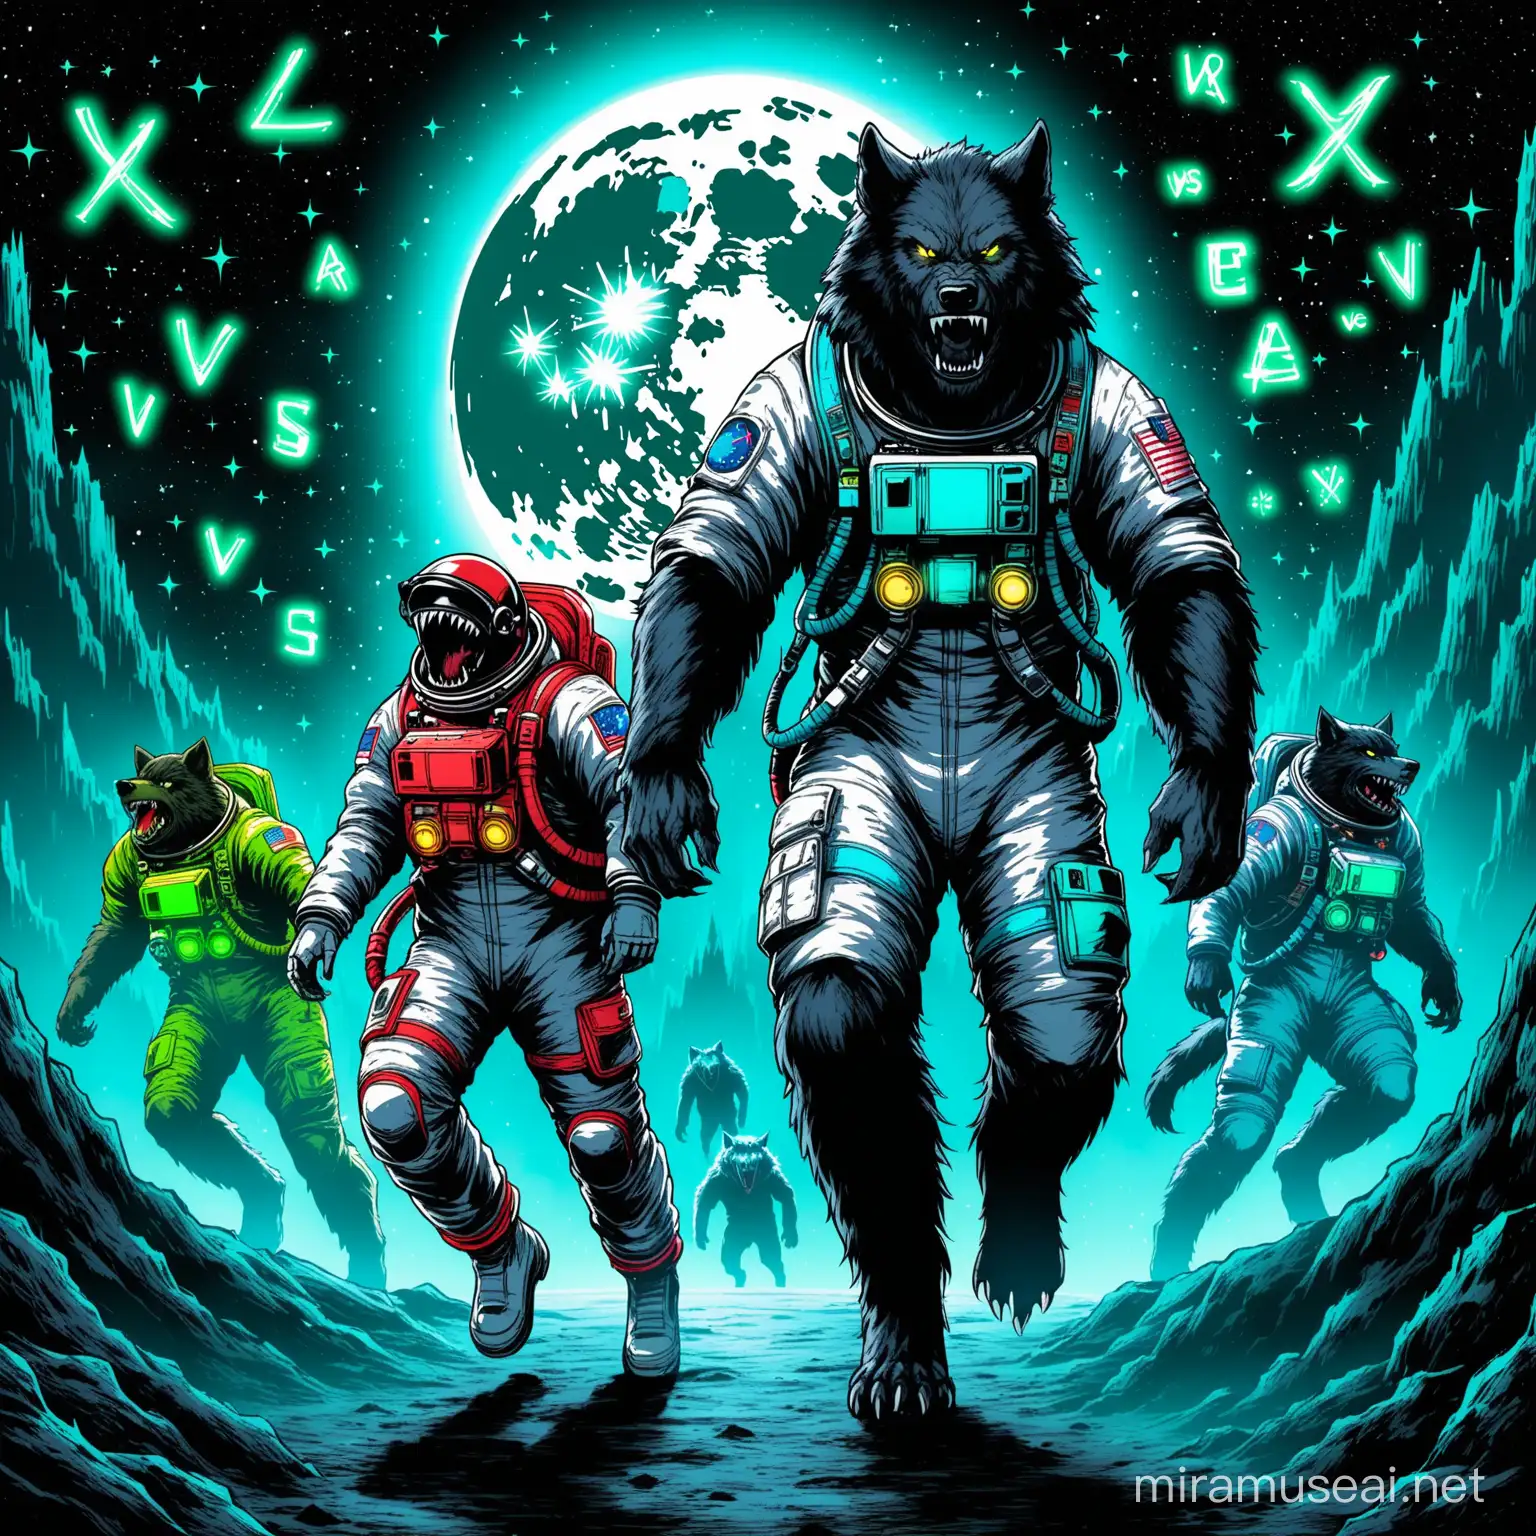 Moonlit Battle Astronaut Encounters Werewolf